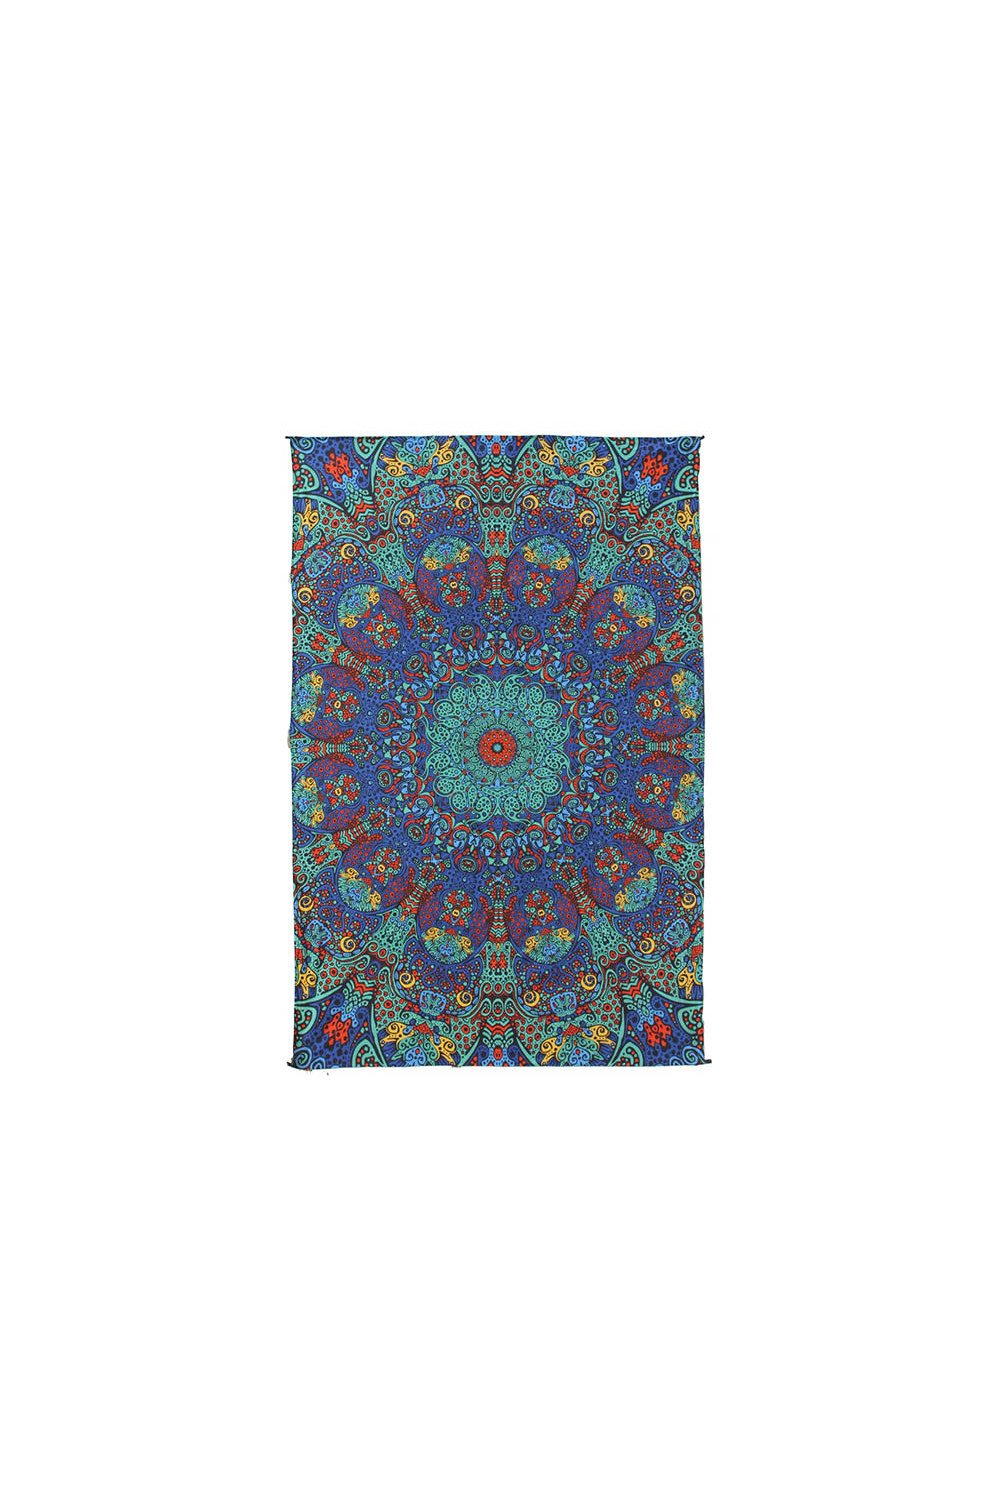 3D Psychedelic Blue Burst Mini Tapestry 30x45 Art by Chris Pinkerton